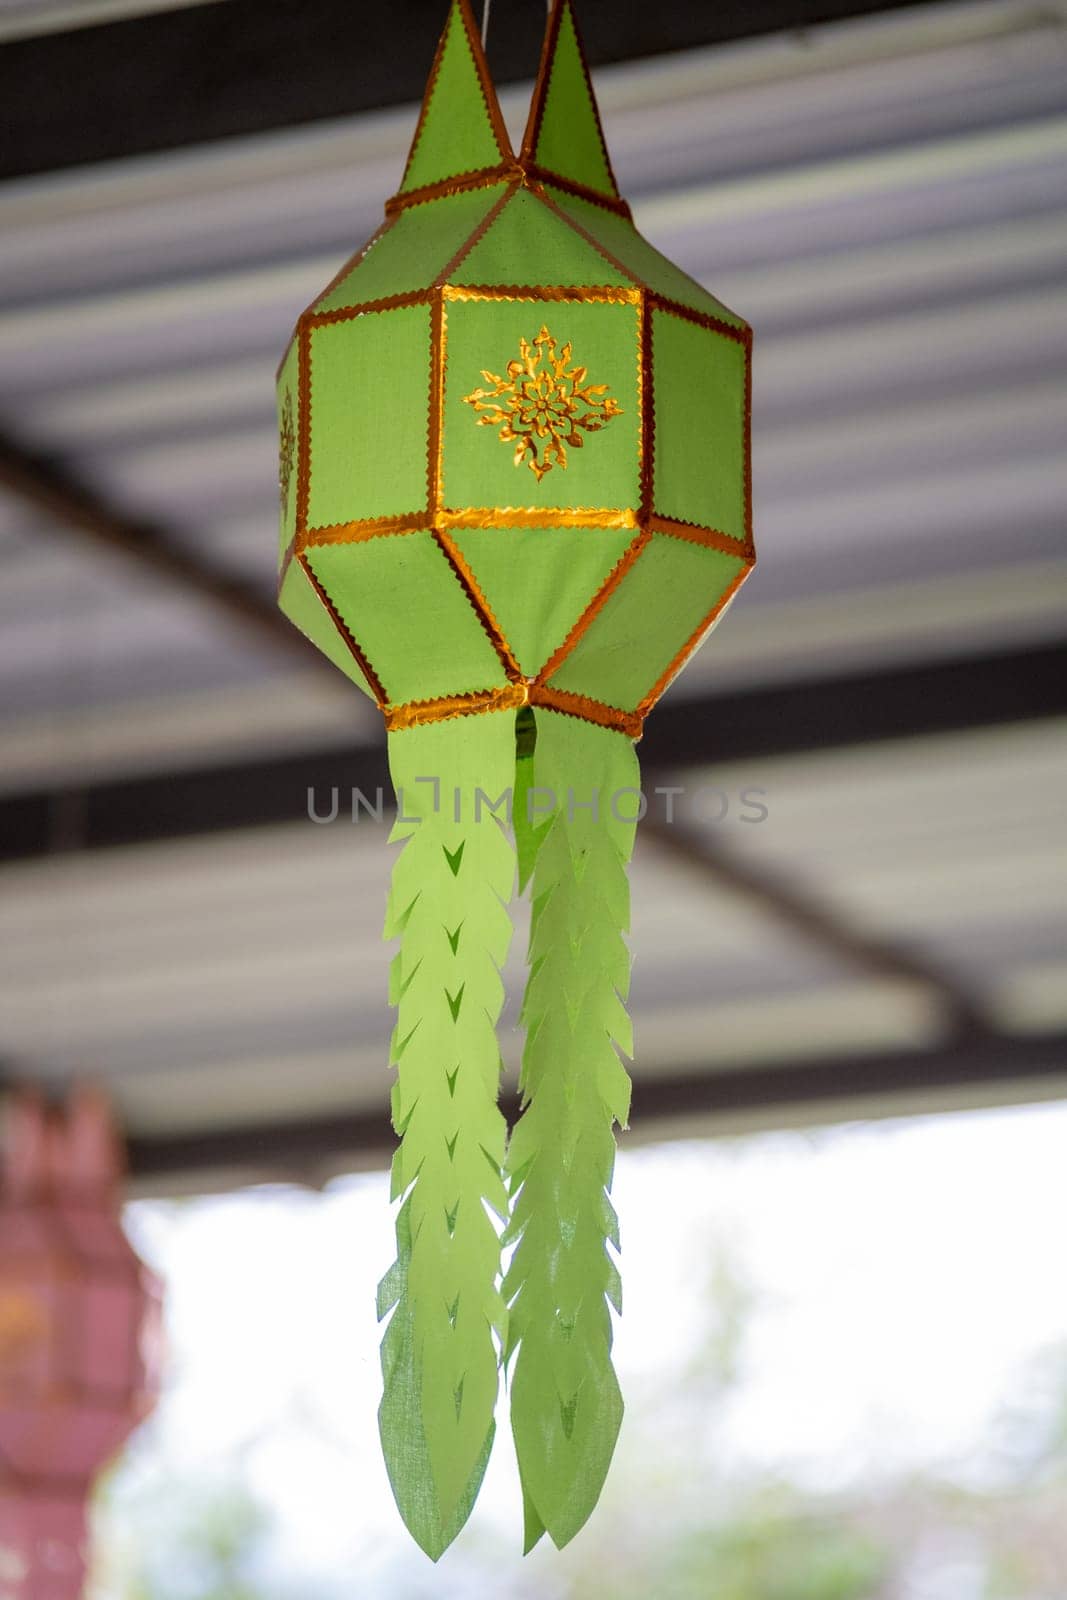 Chiang Mai Lanna Lantern, Local Lanna Lantern, Beautiful Lanna lantern in thai temple. High quality photo